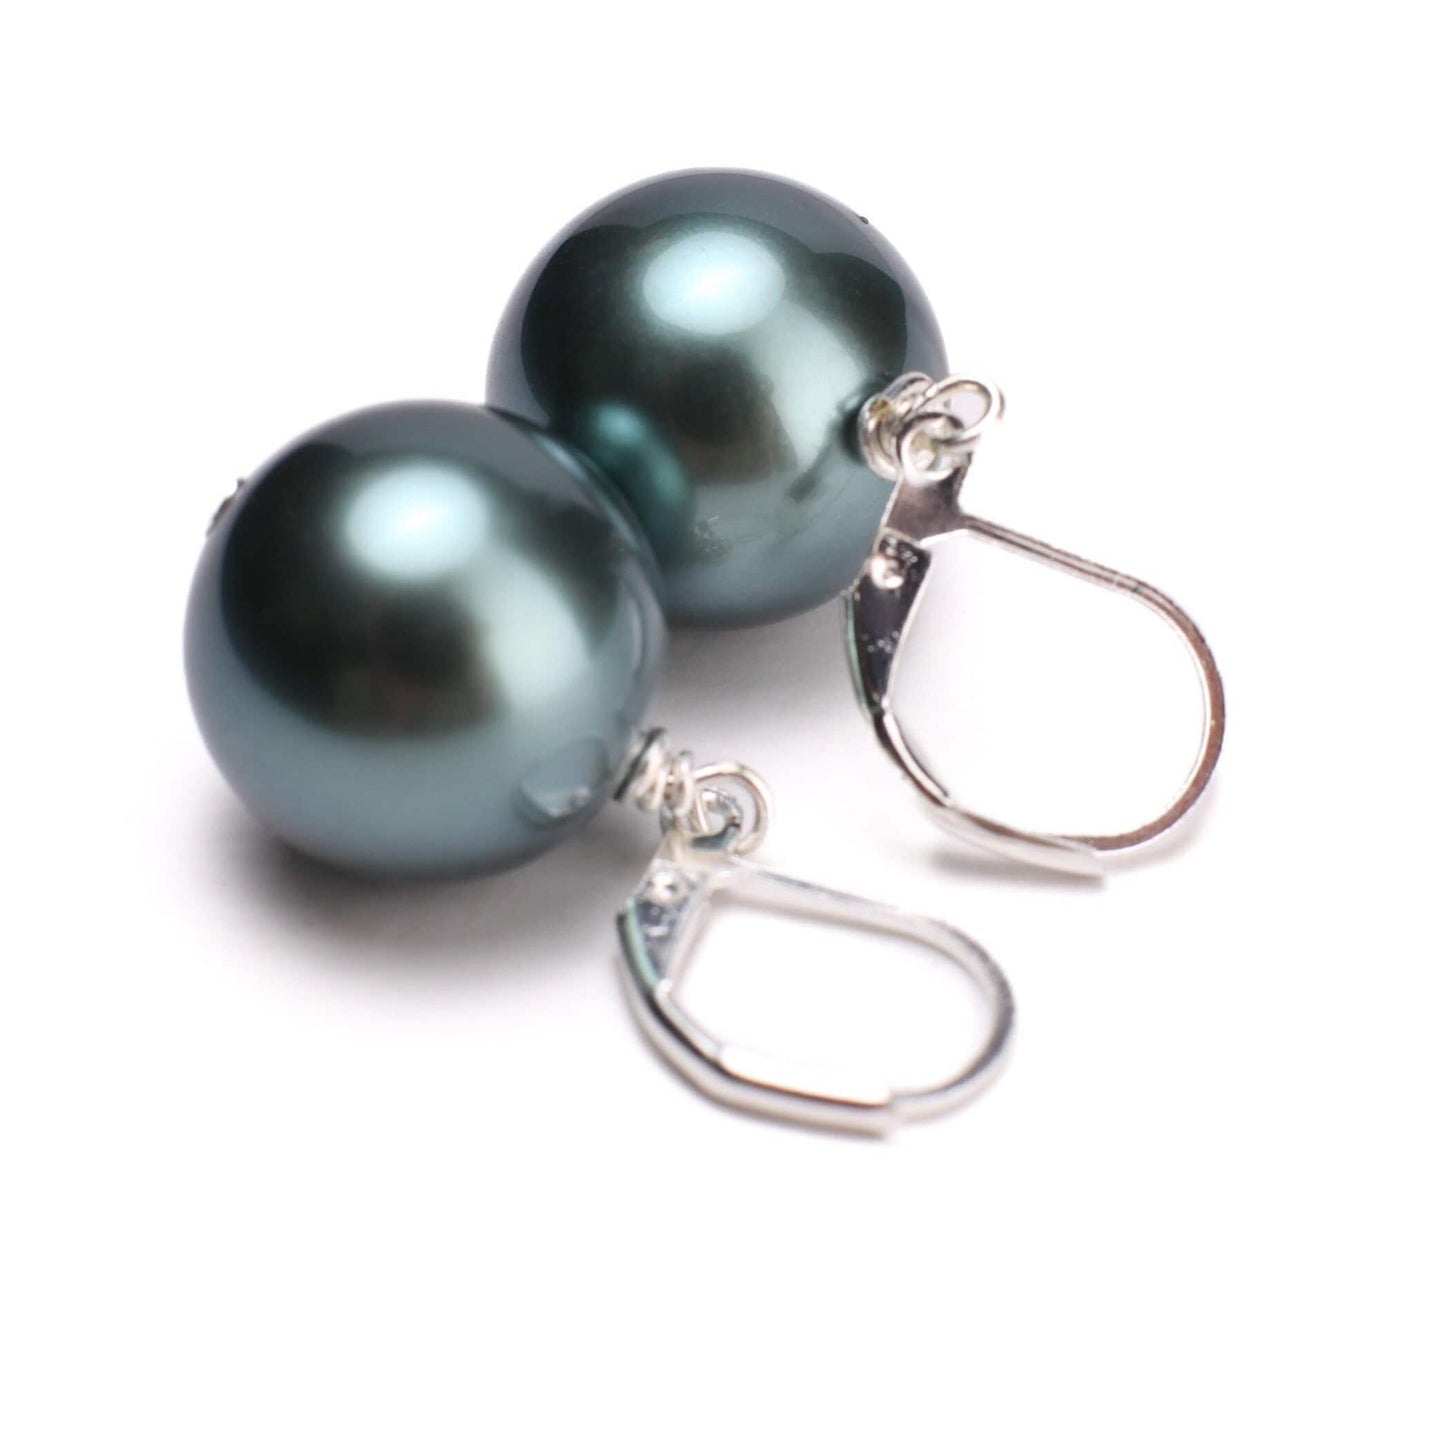 Teal Green South Sea Shell Pearl 16mm Leverback Earrings, Boho, Handmade Gift for Her